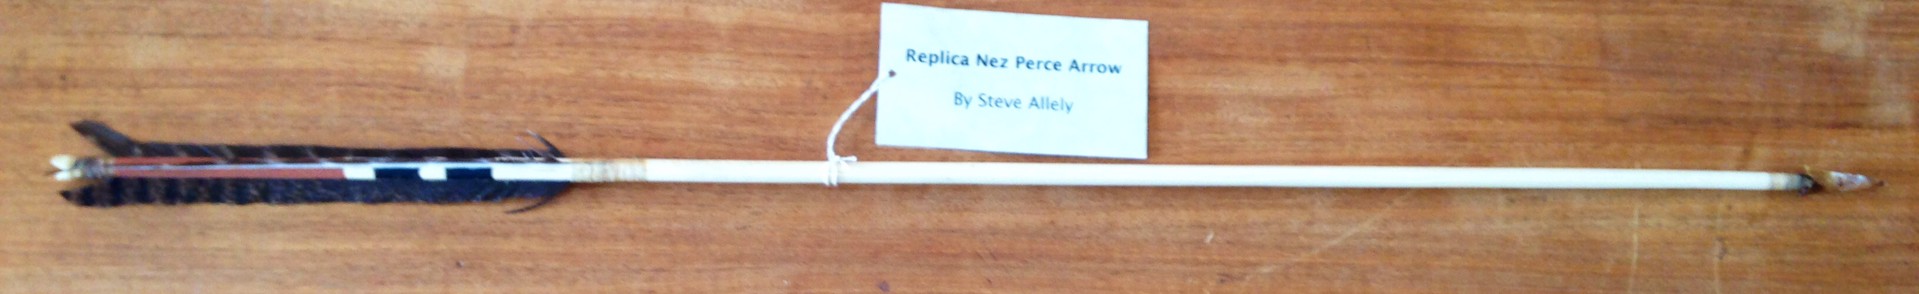 Replica Nez Perce Arrow by Steve Allely